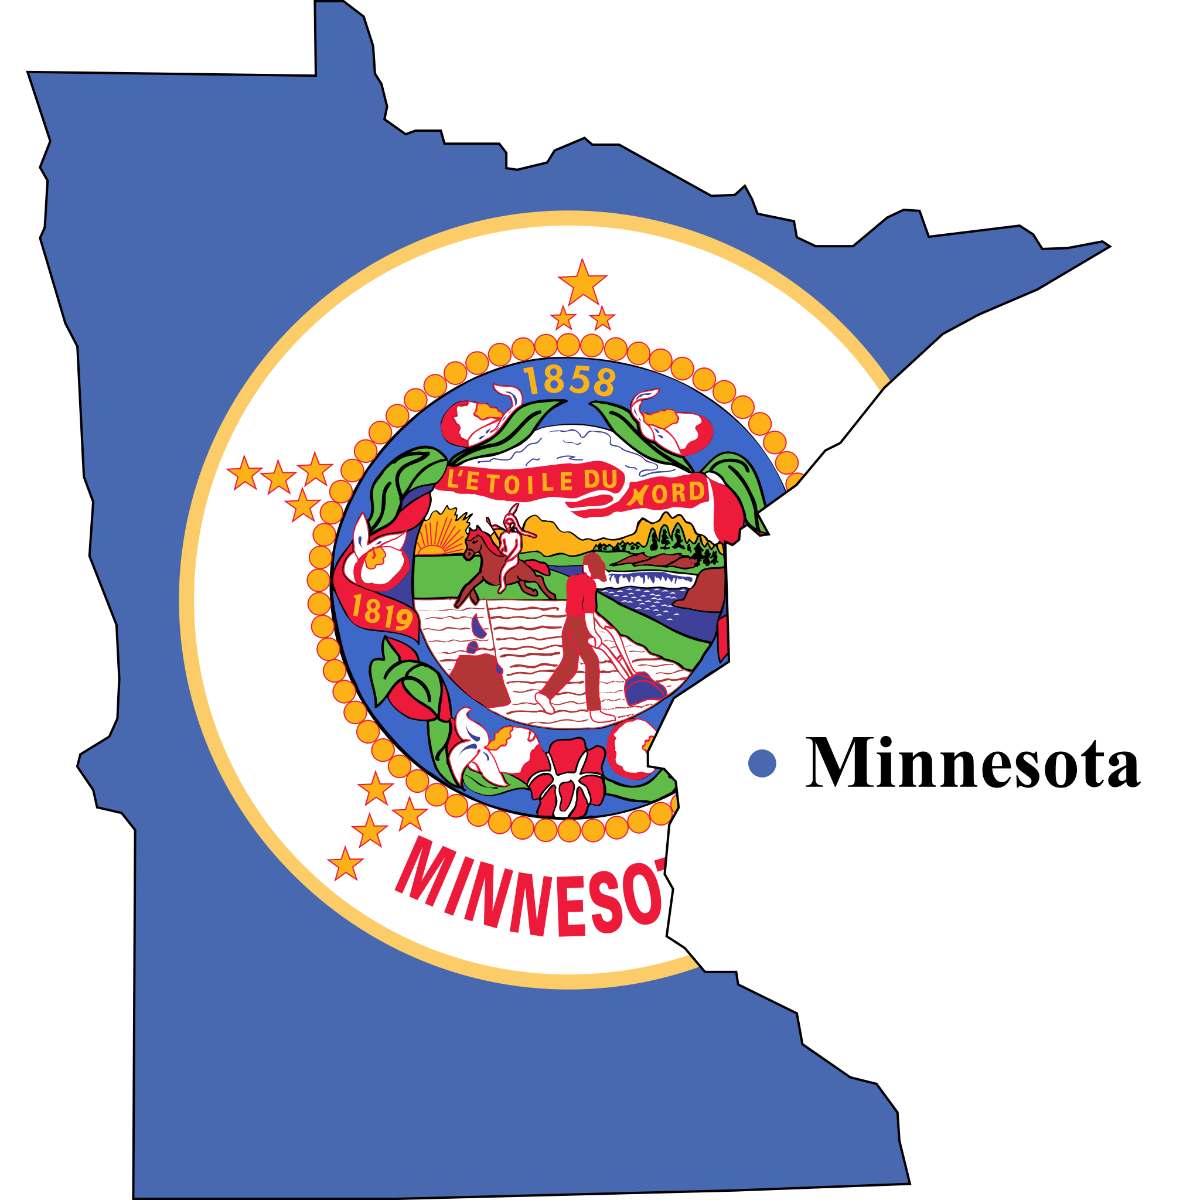 Minnesota State map cutout with Minnesota flag superimposed